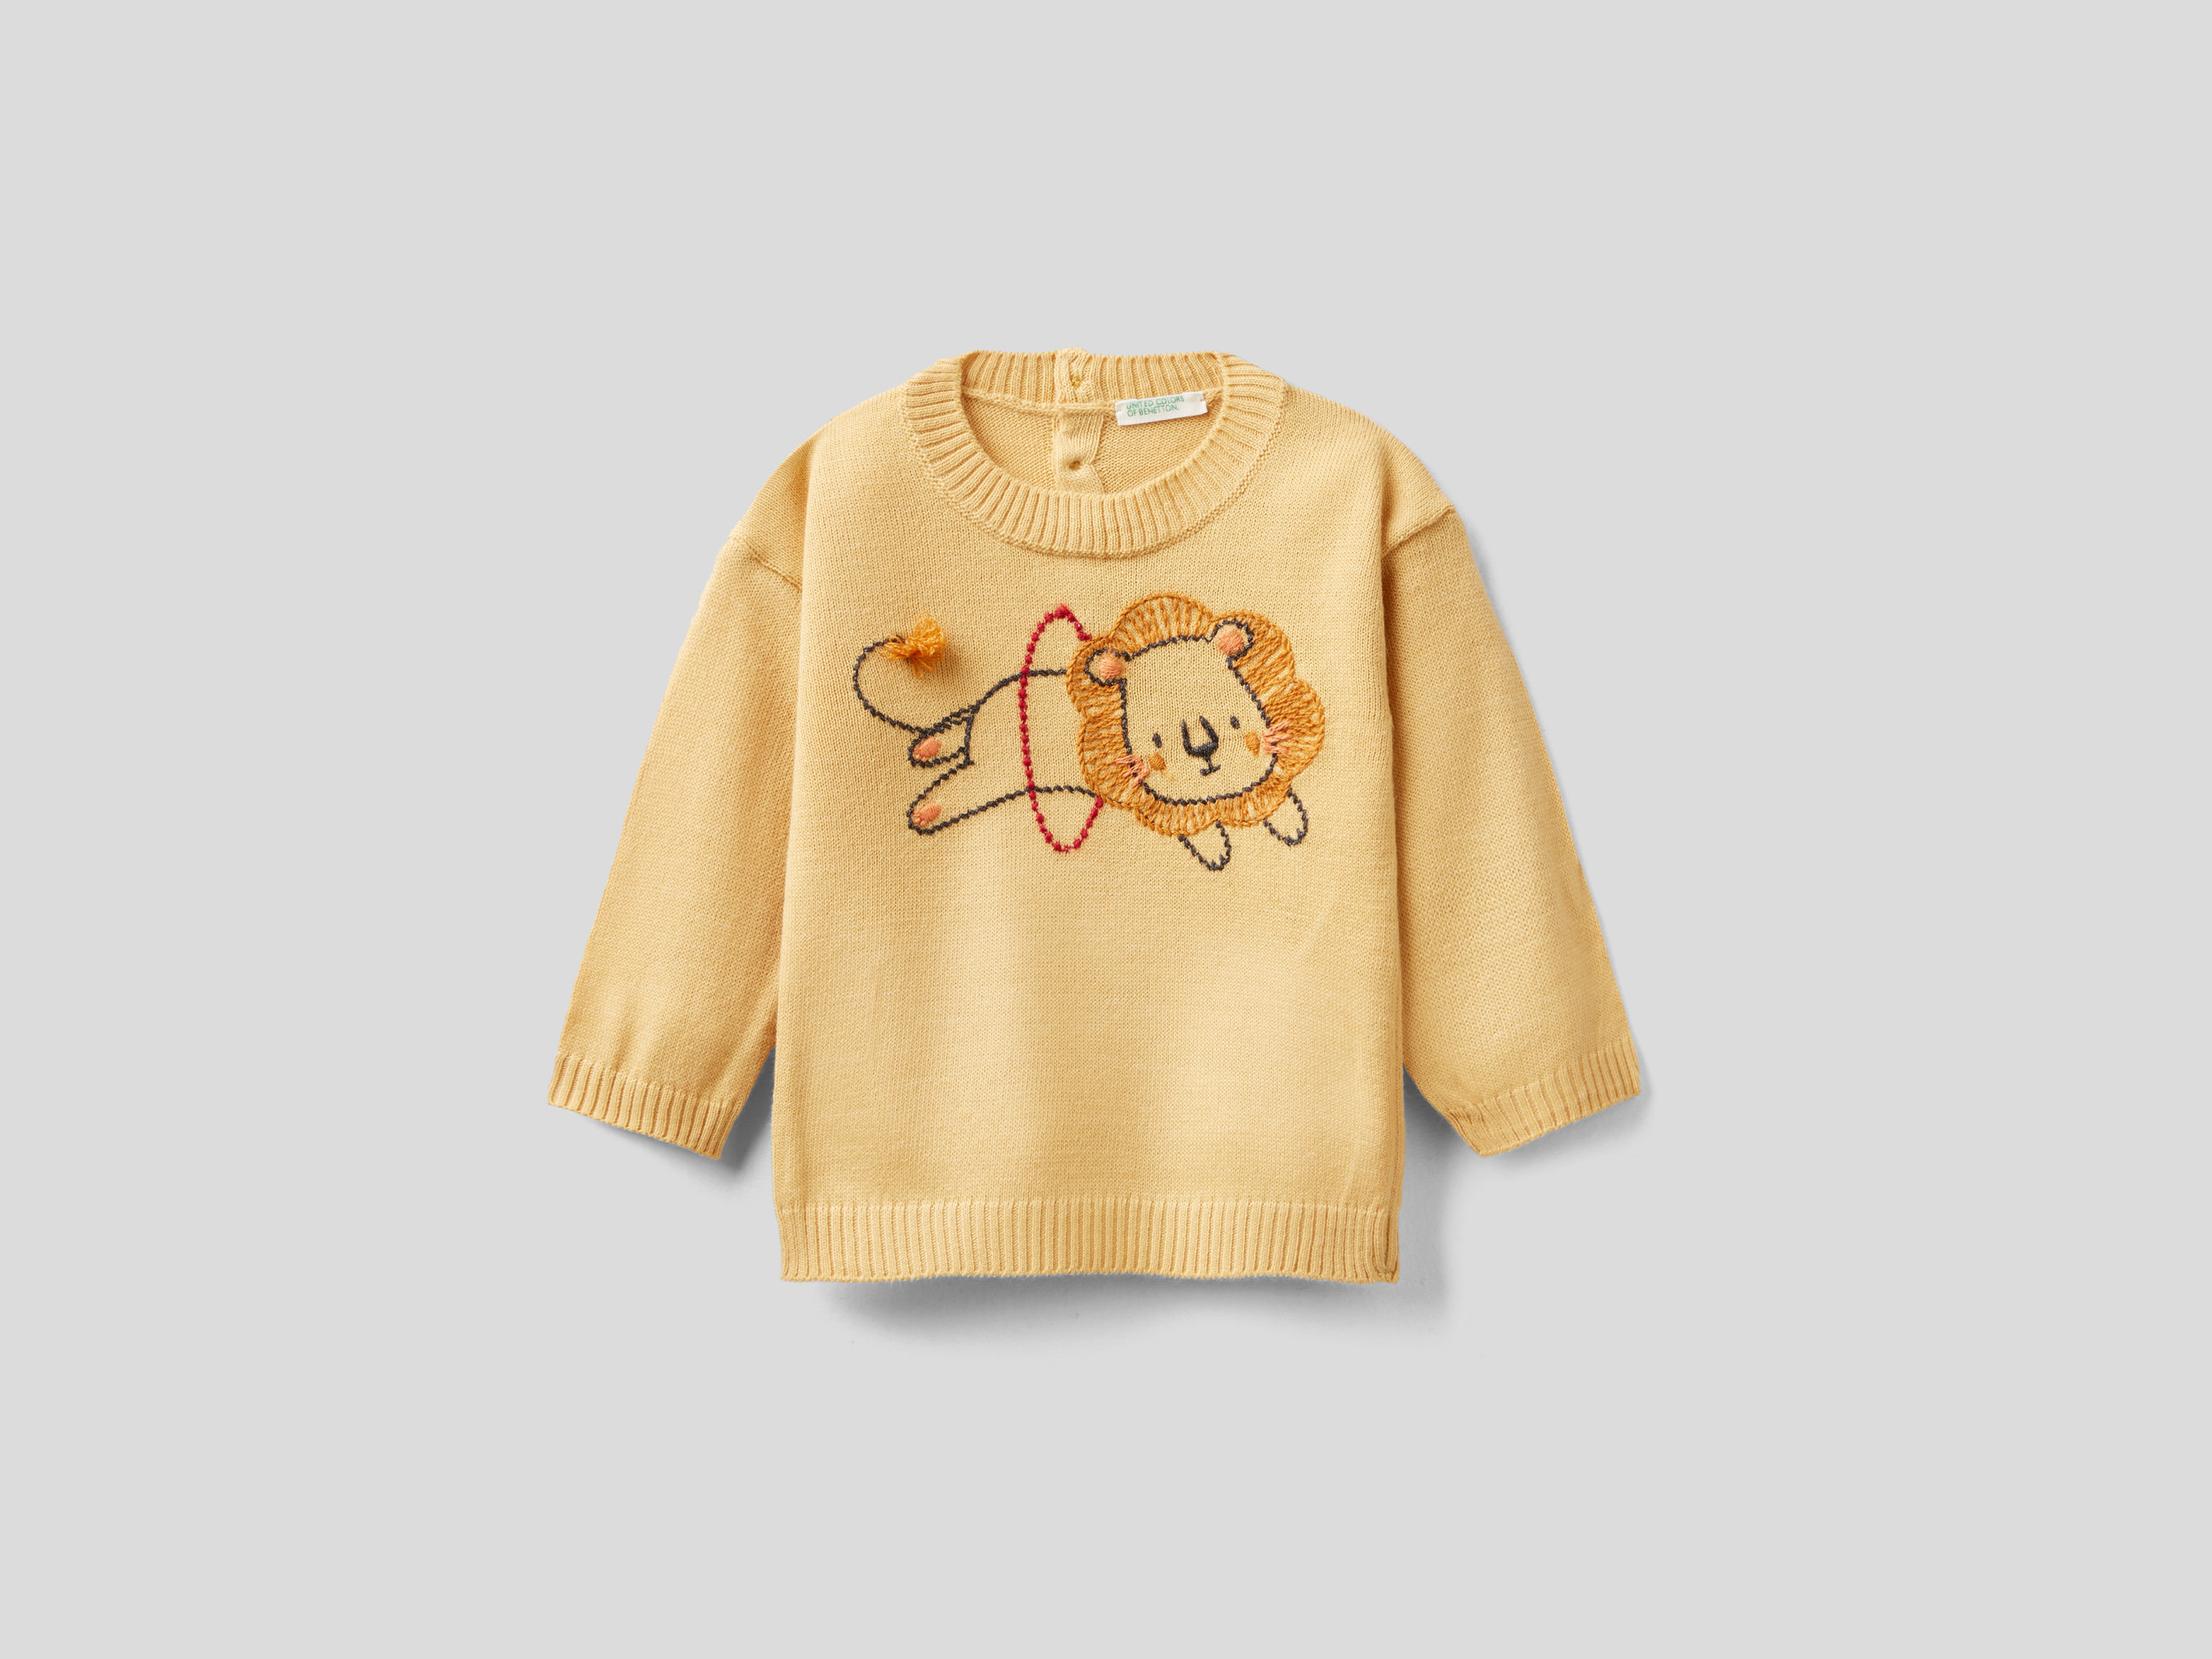 Benetton, Crew Neck Sweater With Embroidery, Taglia 0-1, Yellow, Kids